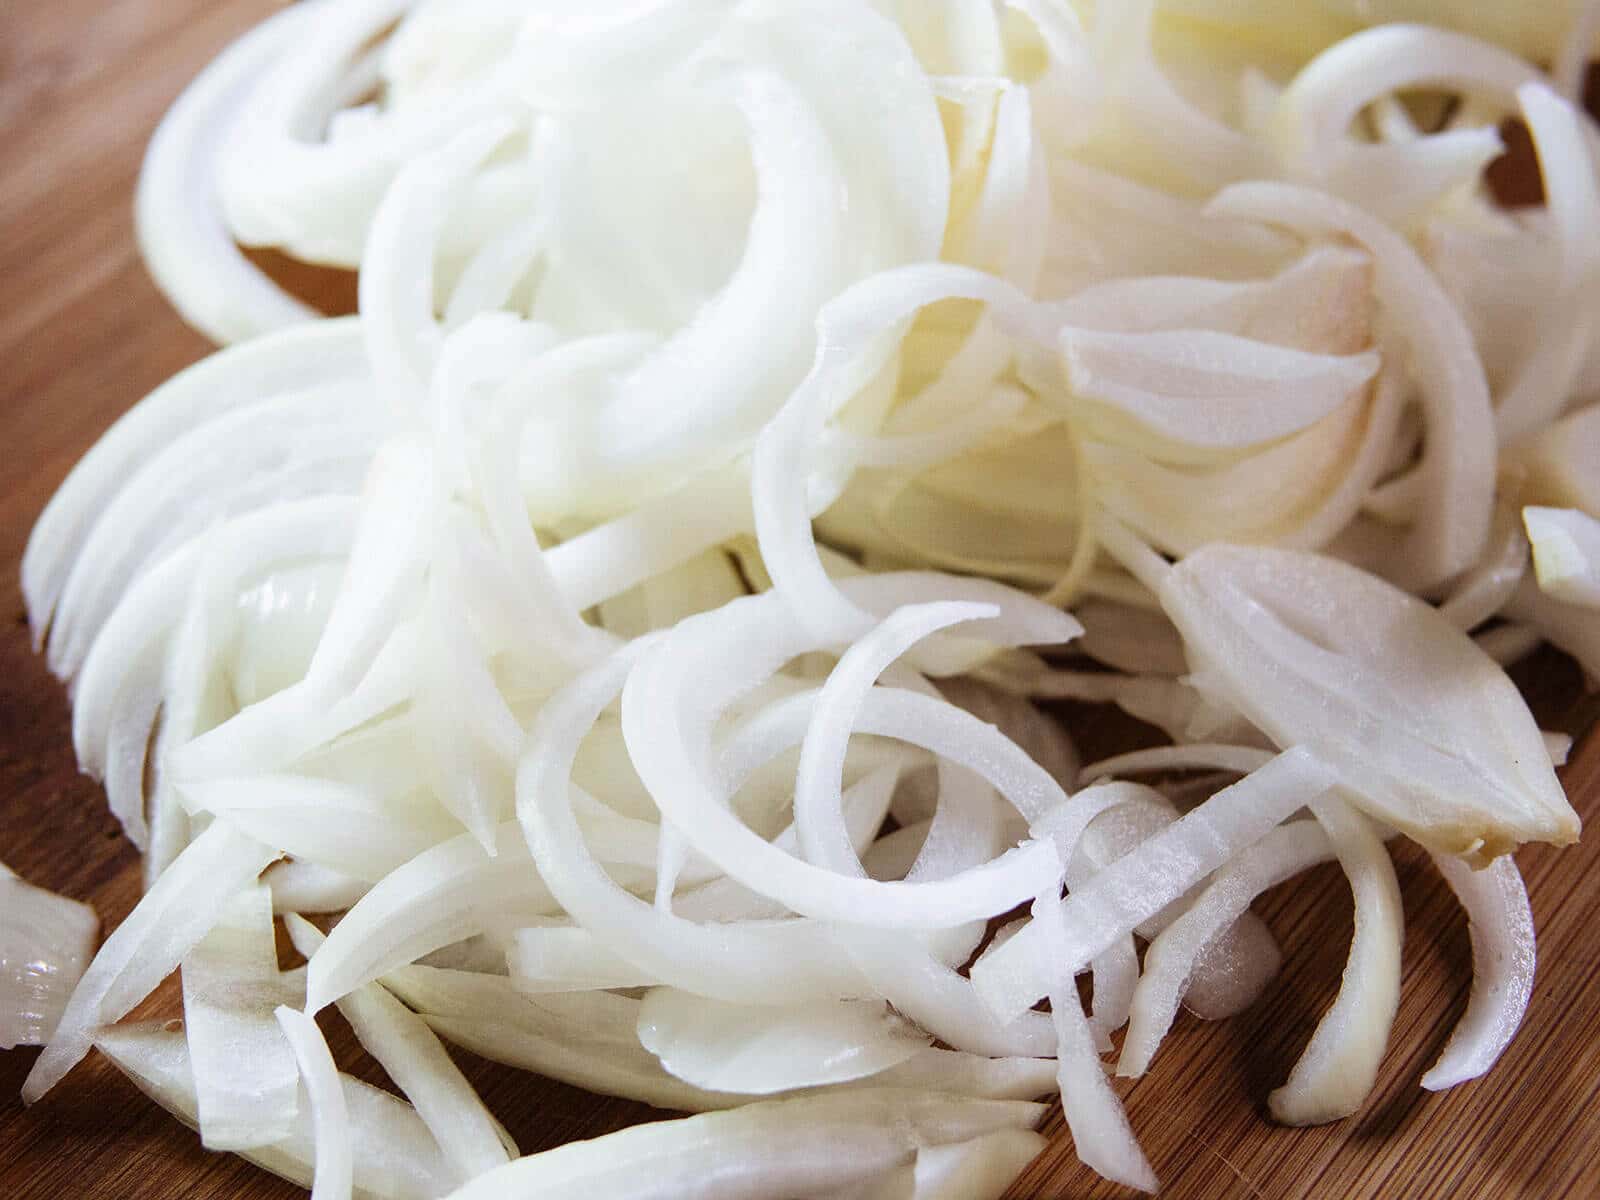 Pungent onion slices